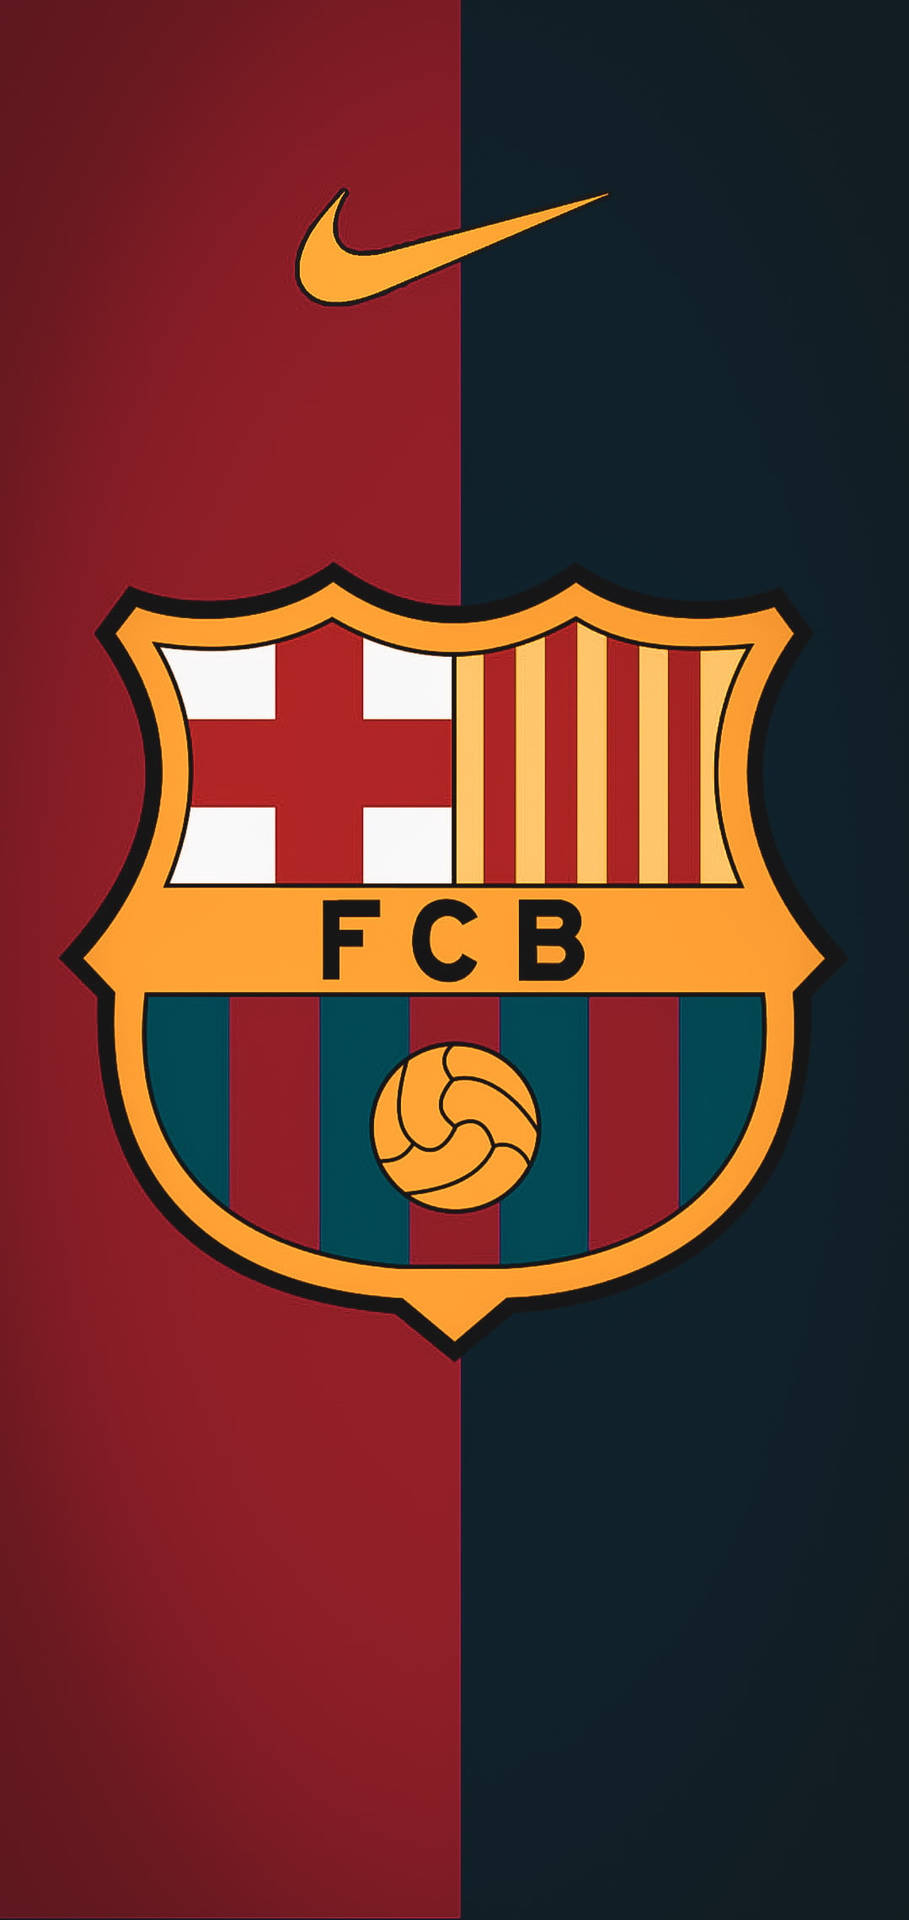 Barcelona Fc And Nike Logos Wallpaper